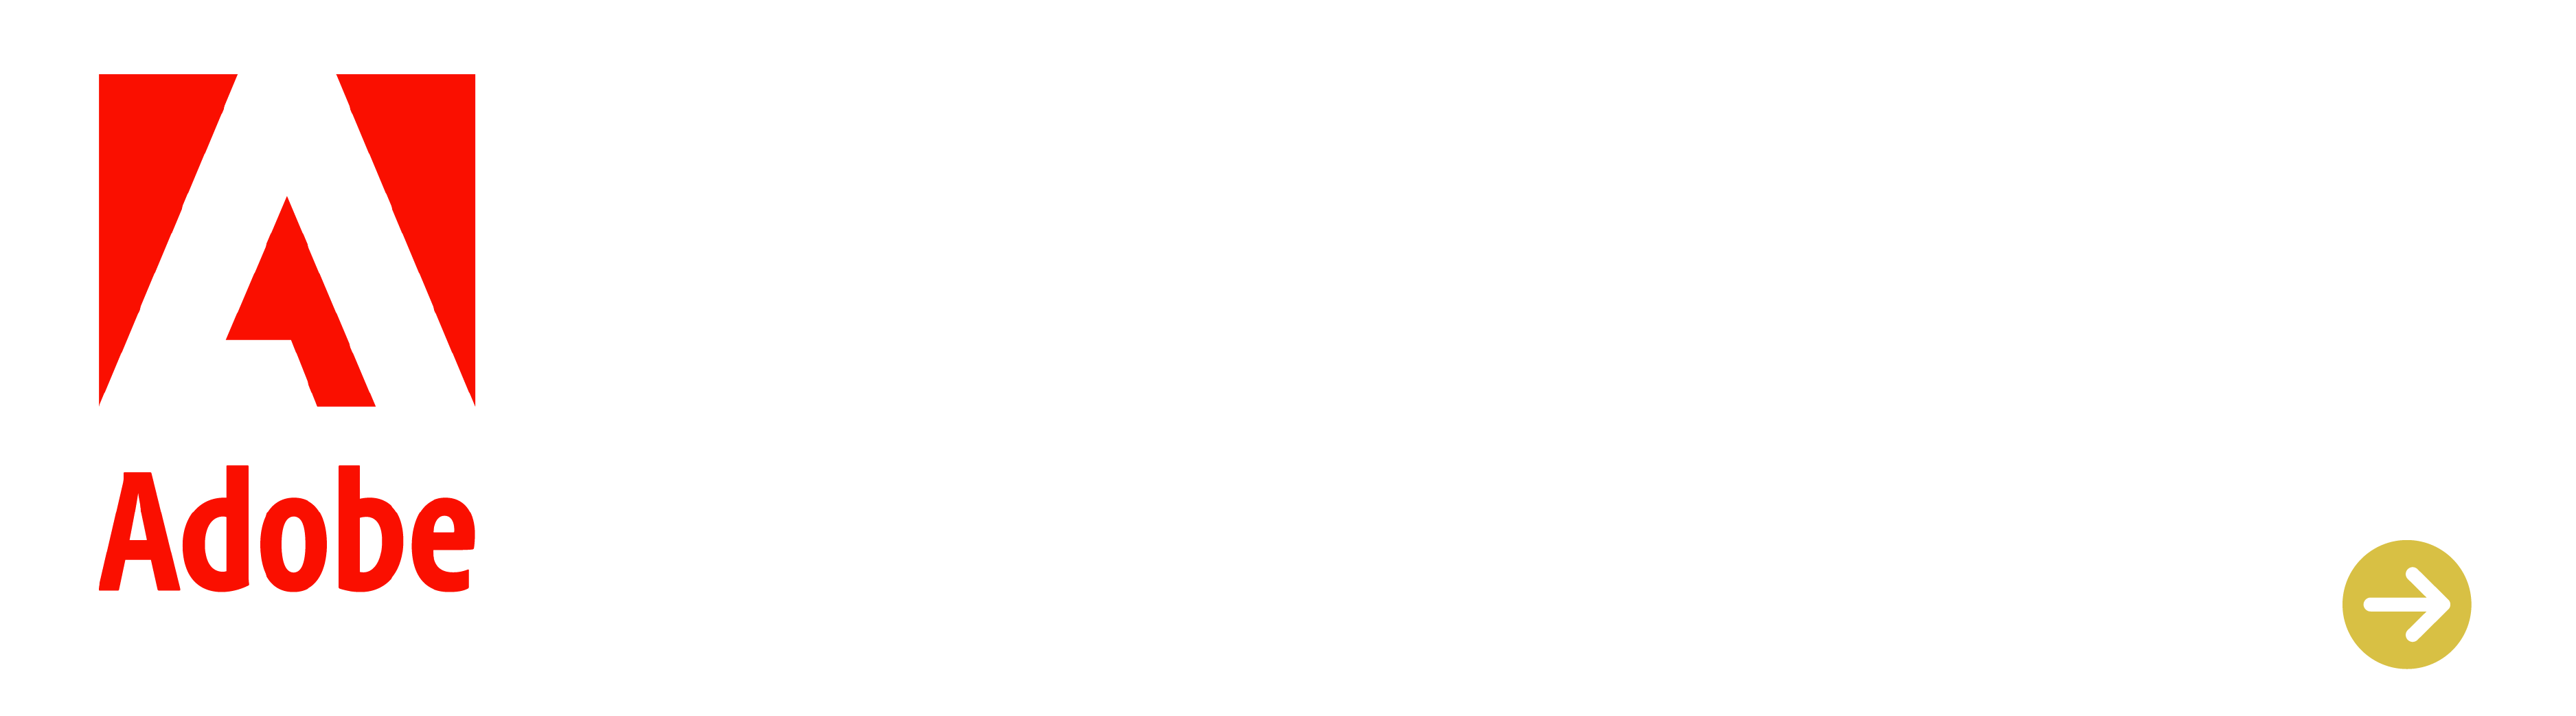 Adobe-first-technology-partner-Readability-Matters